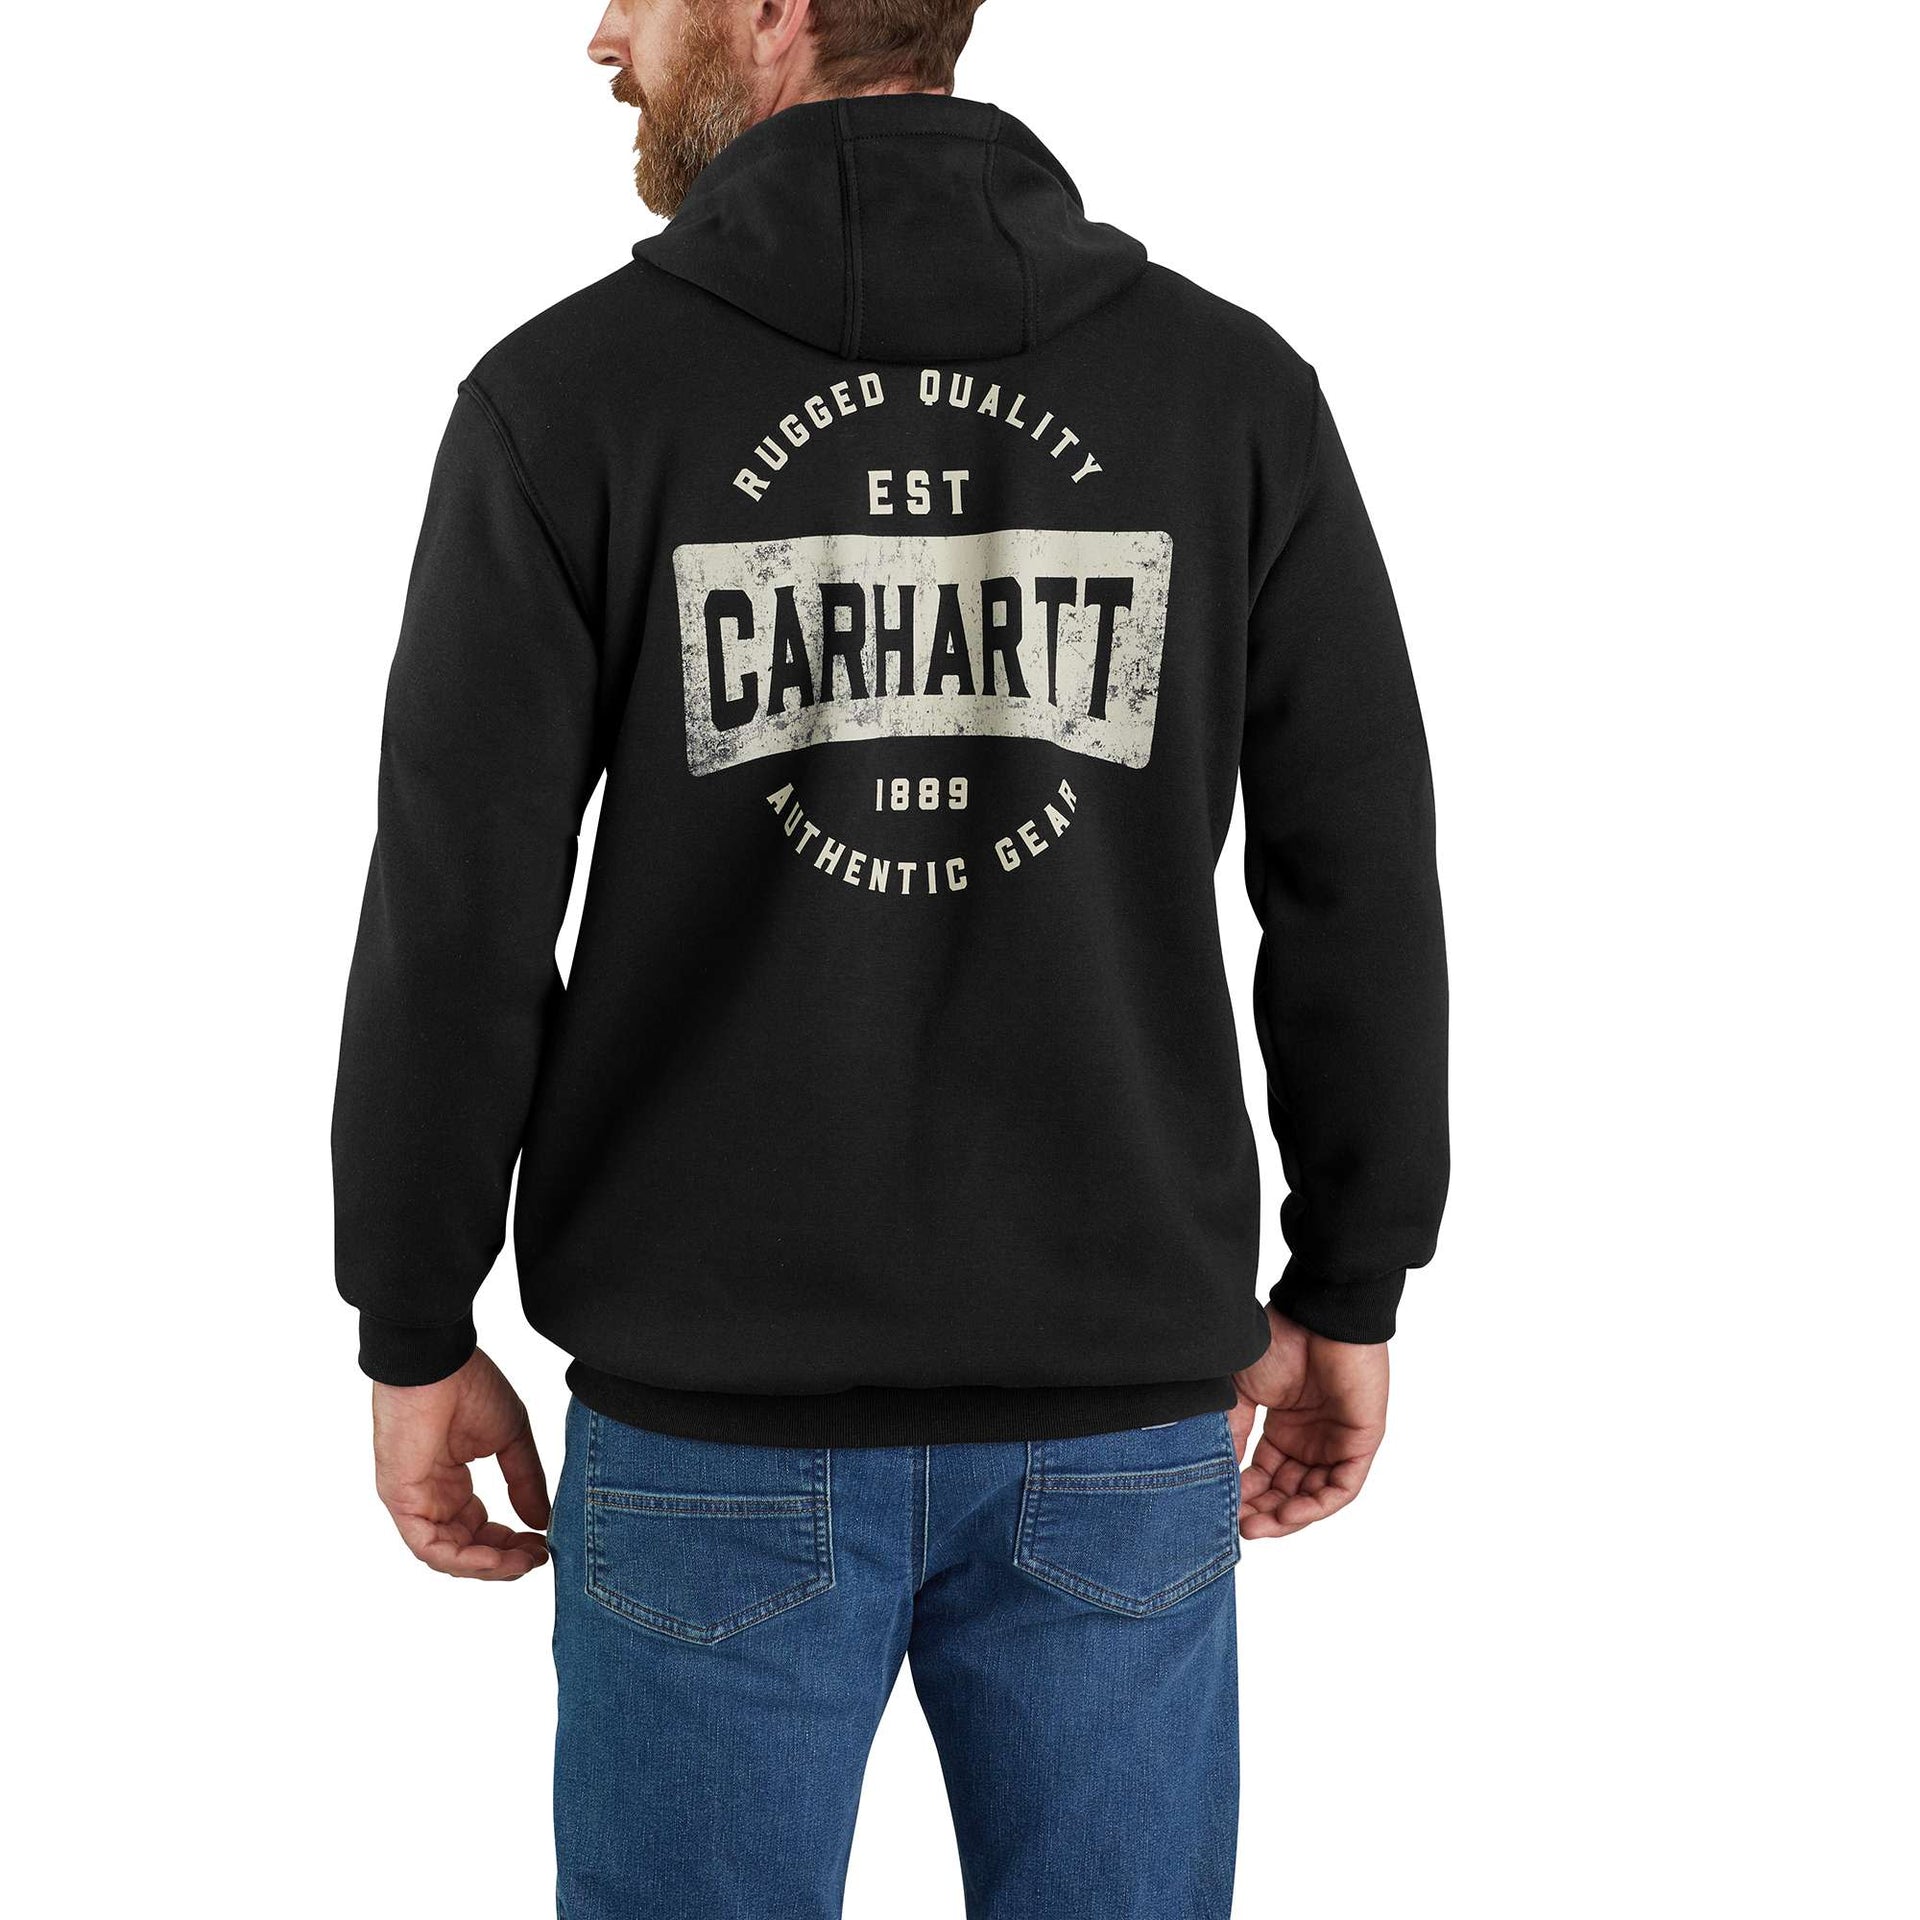 Carhartt Reworked Color Block Zip Up Sweatshirt/ Jacket Size M J149 BRN  Blk/Gray